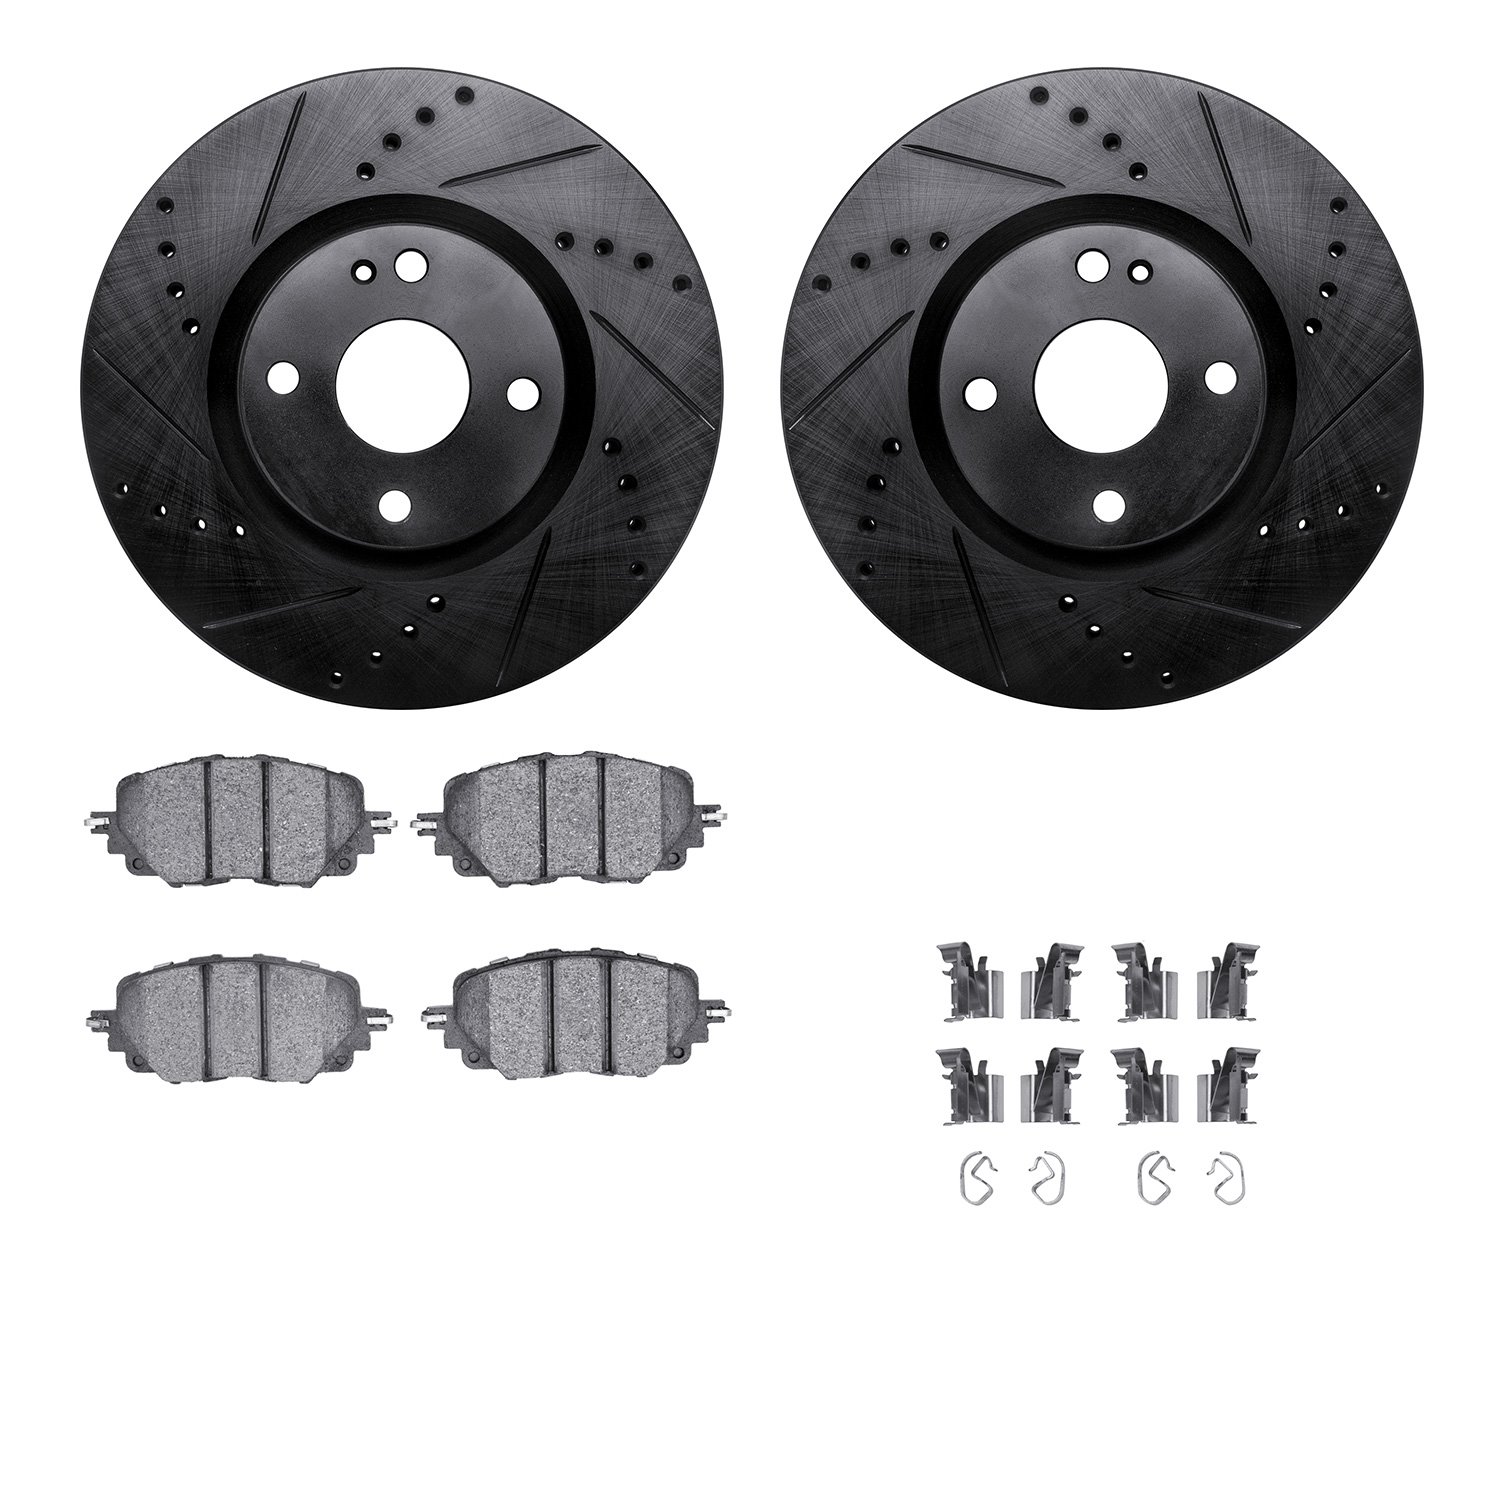 8612-80008 Drilled/Slotted Brake Rotors w/5000 Euro Ceramic Brake Pads Kit & Hardware [Black], Fits Select Multiple Makes/Models